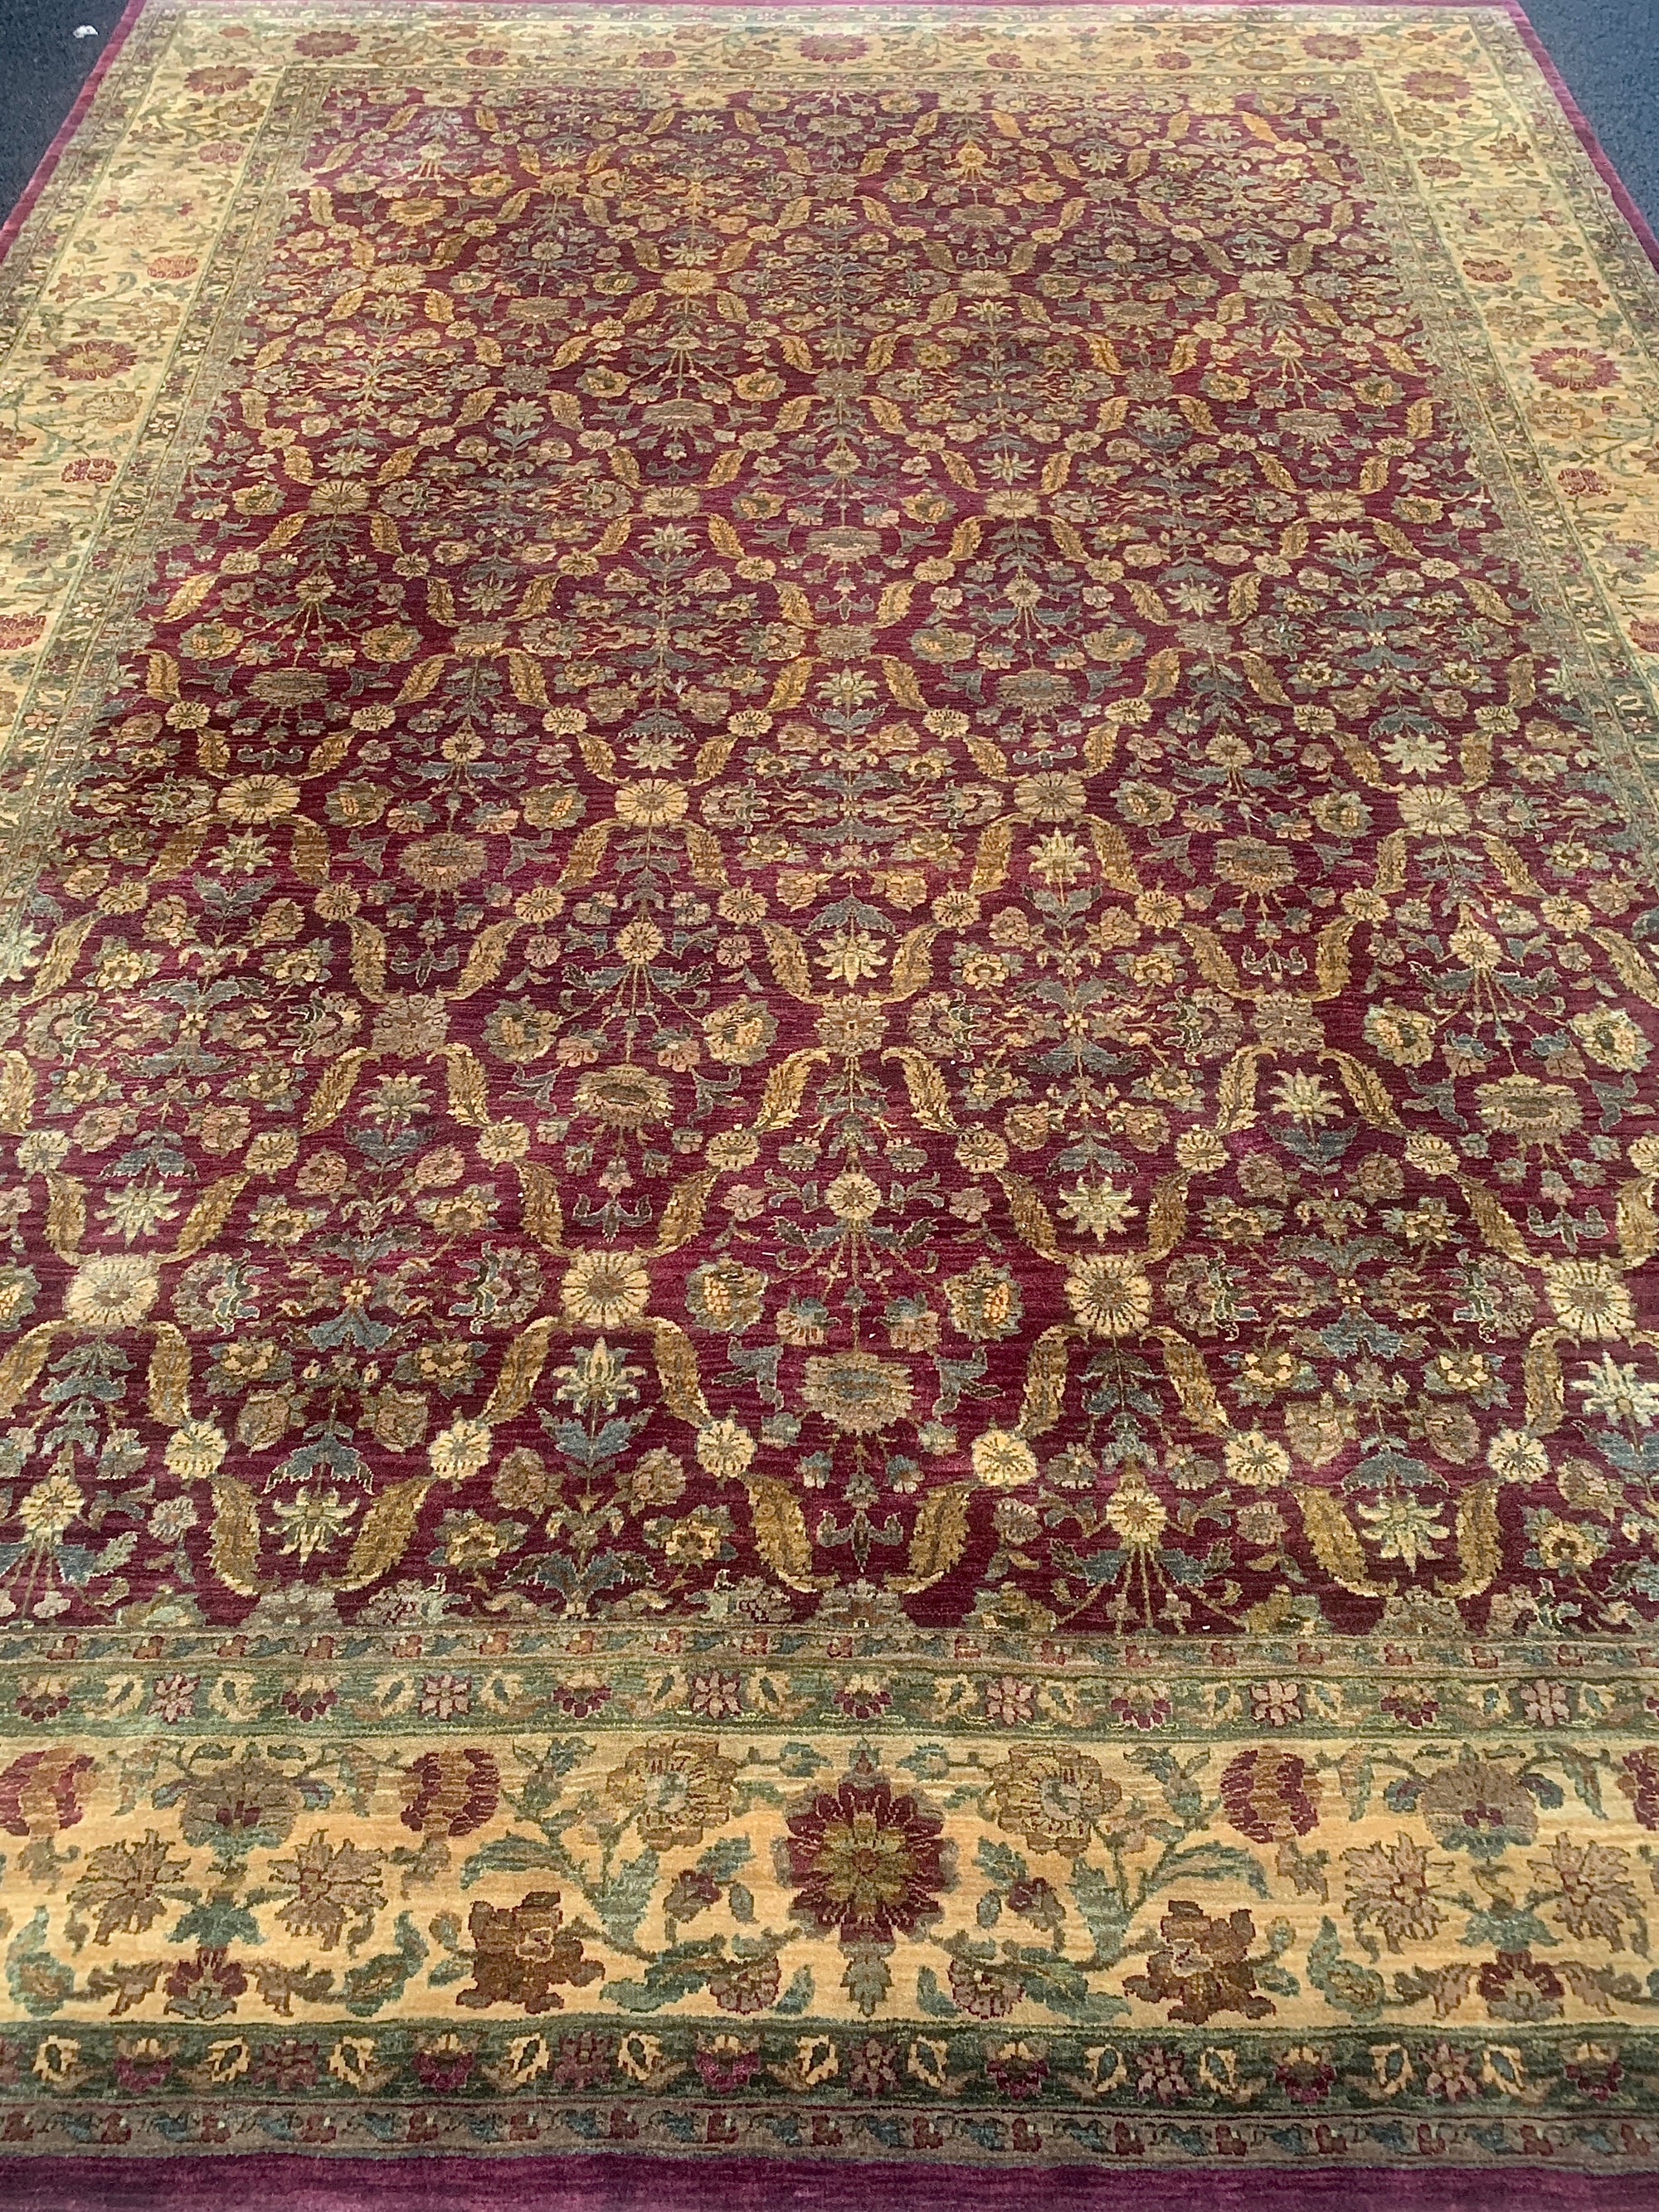 Mughal design Indian carpet (435 x 311cm)